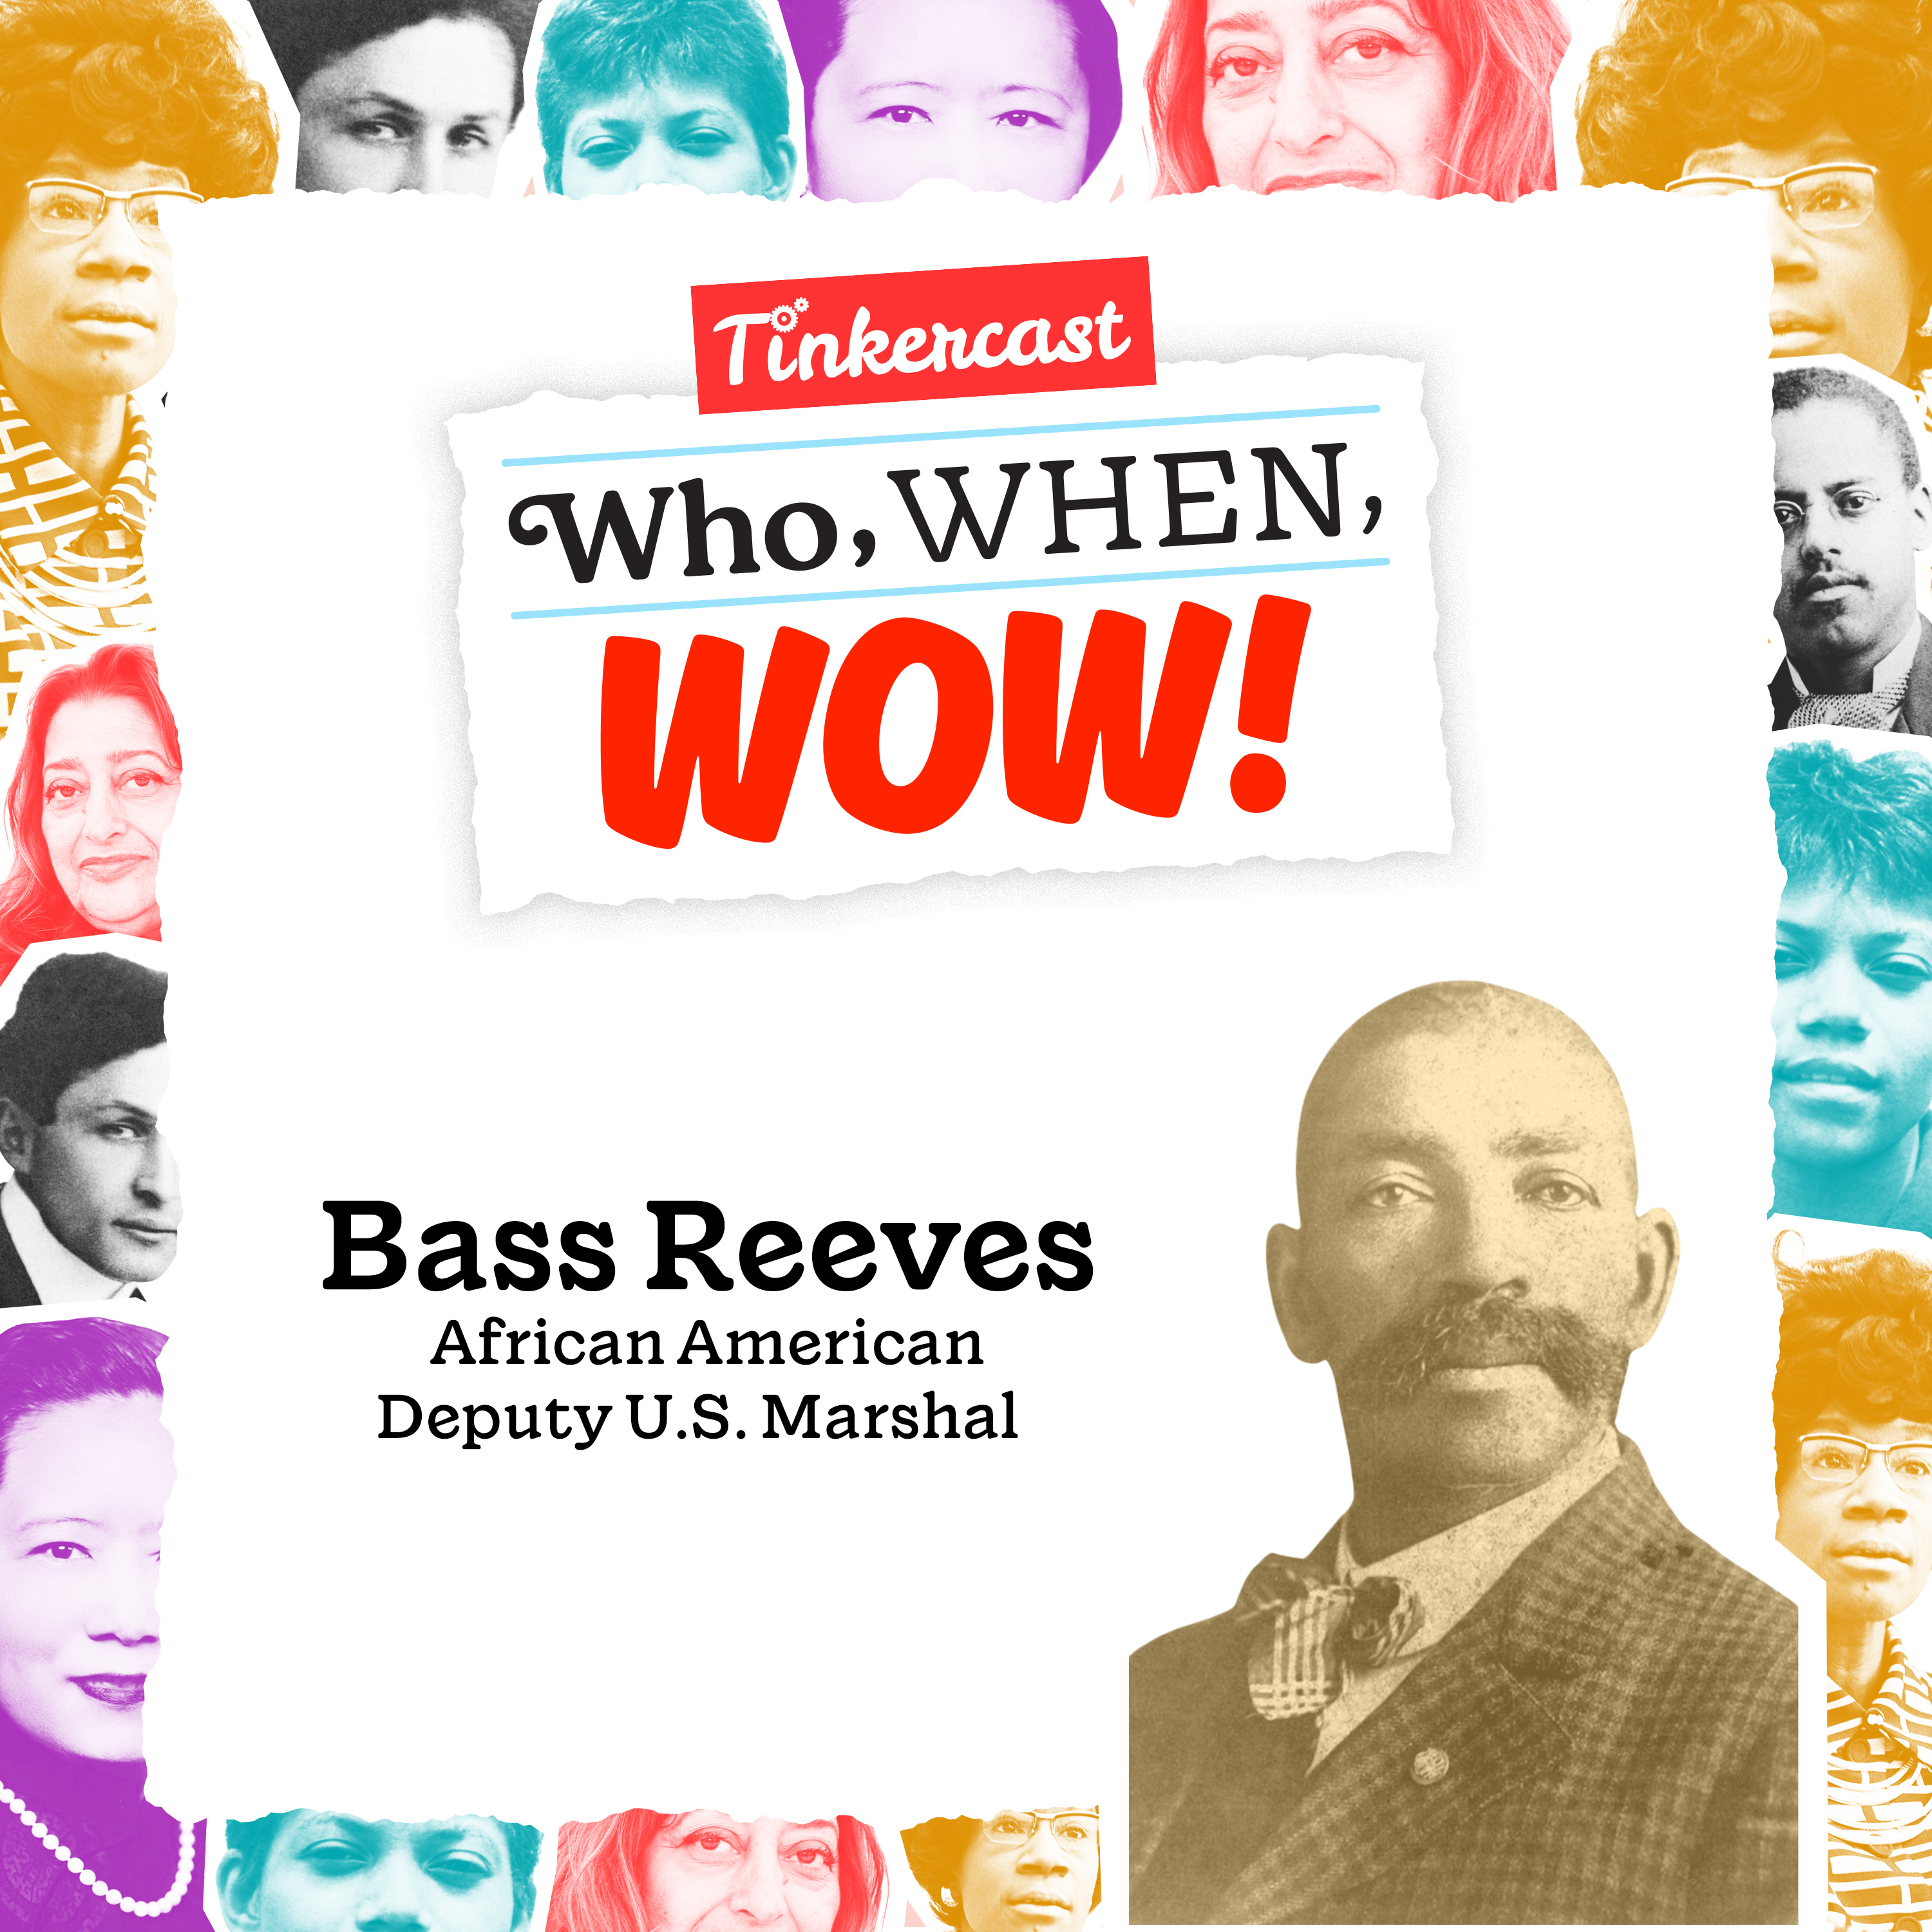 Bass Reeves: Deputy U.S. Marshal